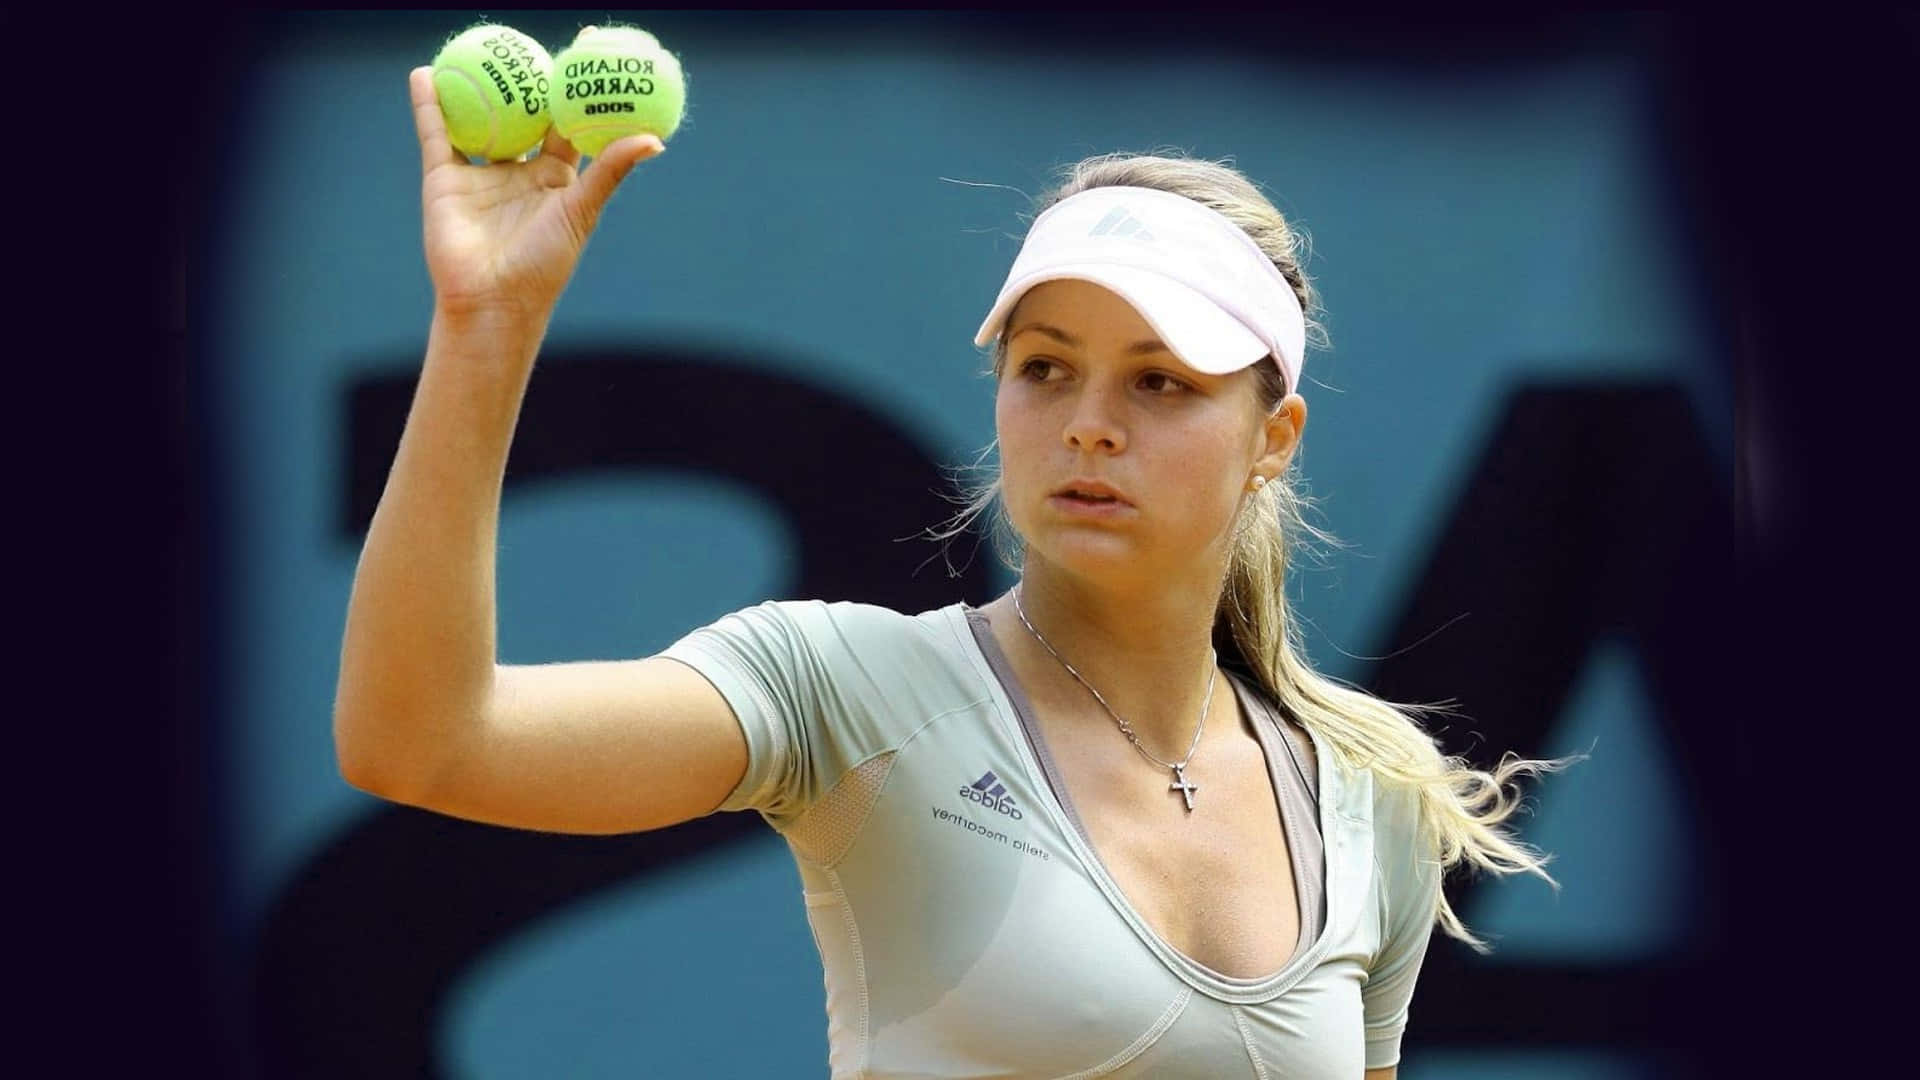 HD Russian Tennis Player Maria Kirilenko Background